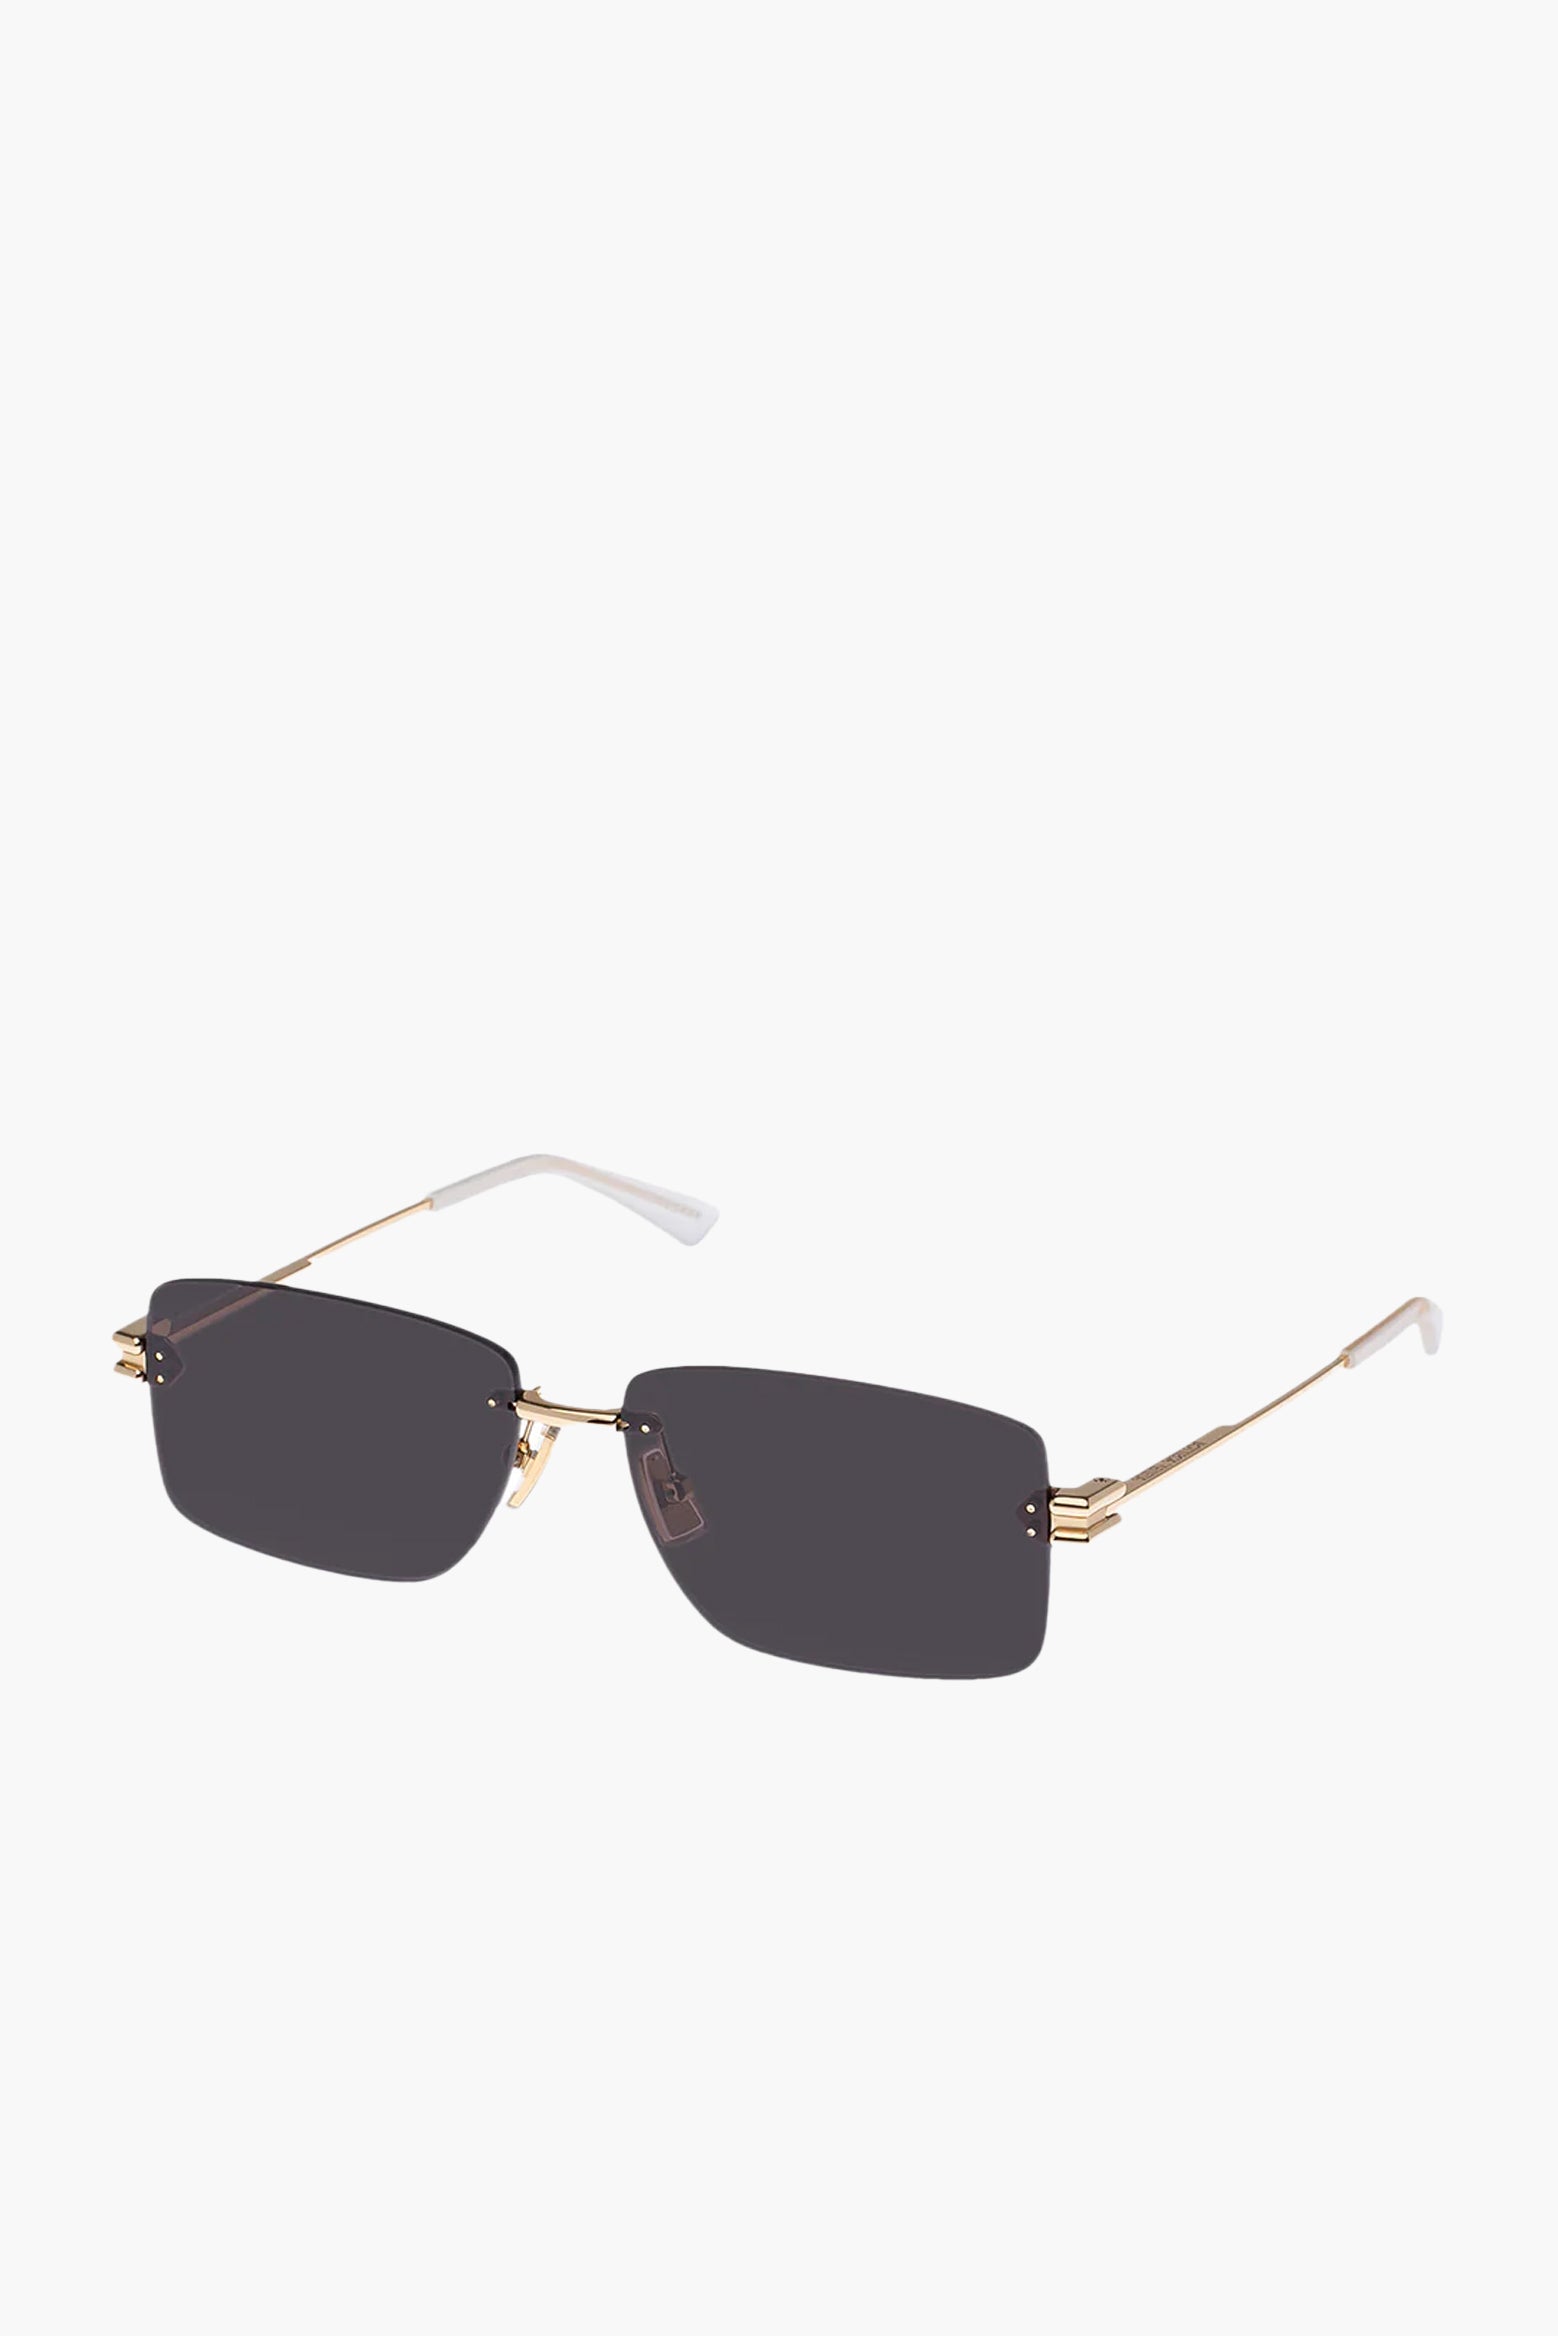 Bottega Veneta Rectangle Metal Sunglasses in Gold available at The New Trend Australia.